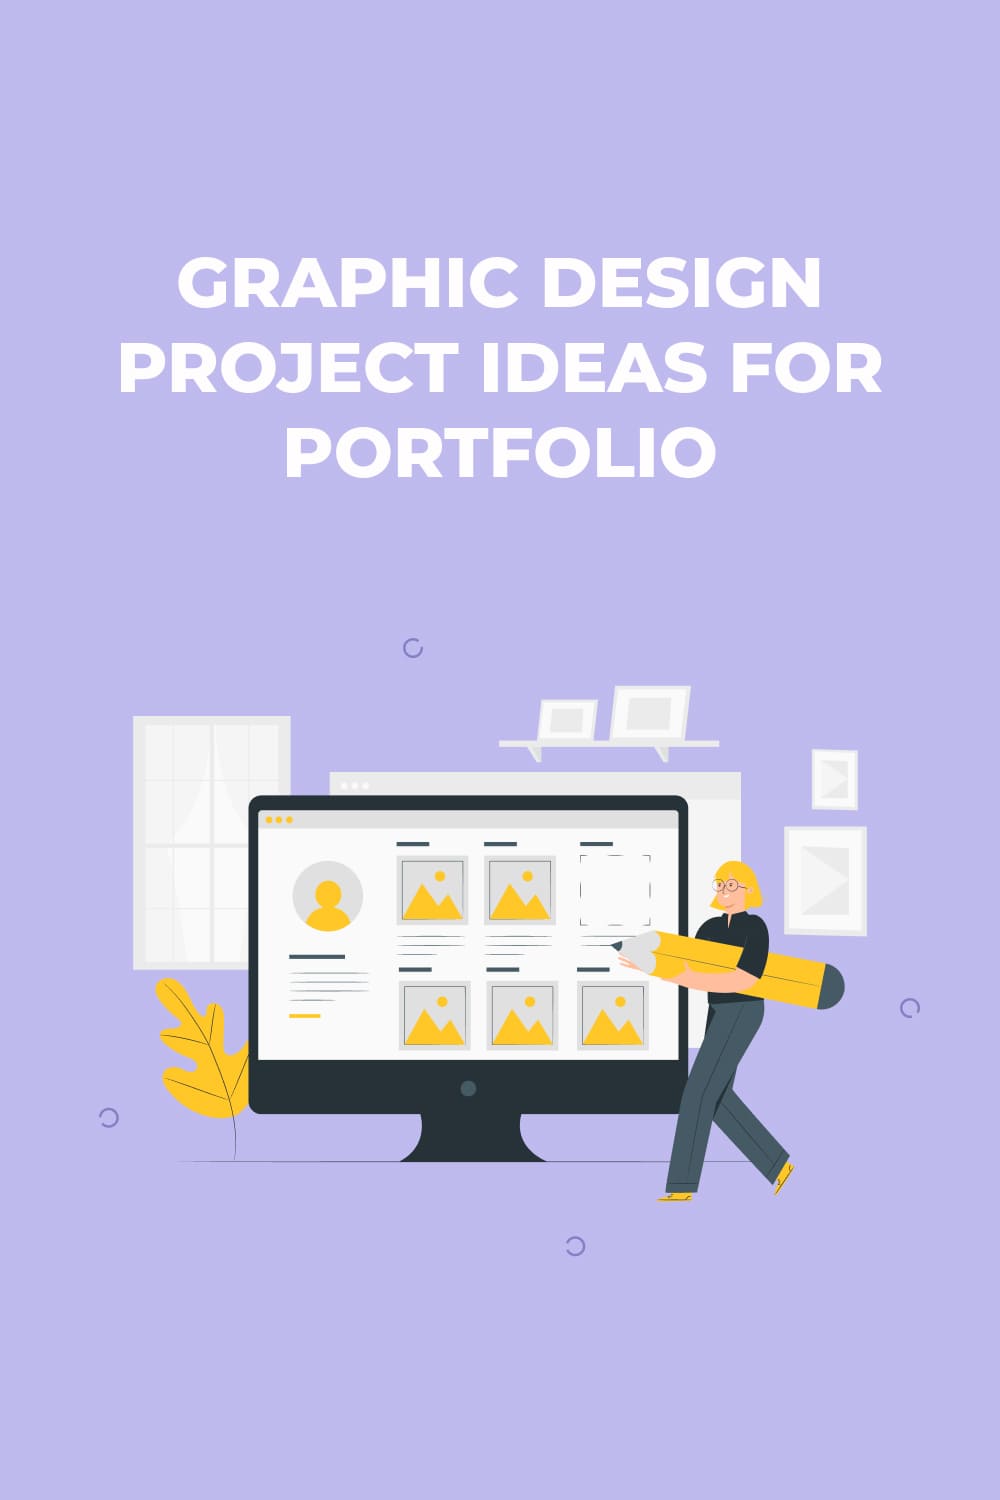 10 graphic design project ideas for portfolio pinterest image 191